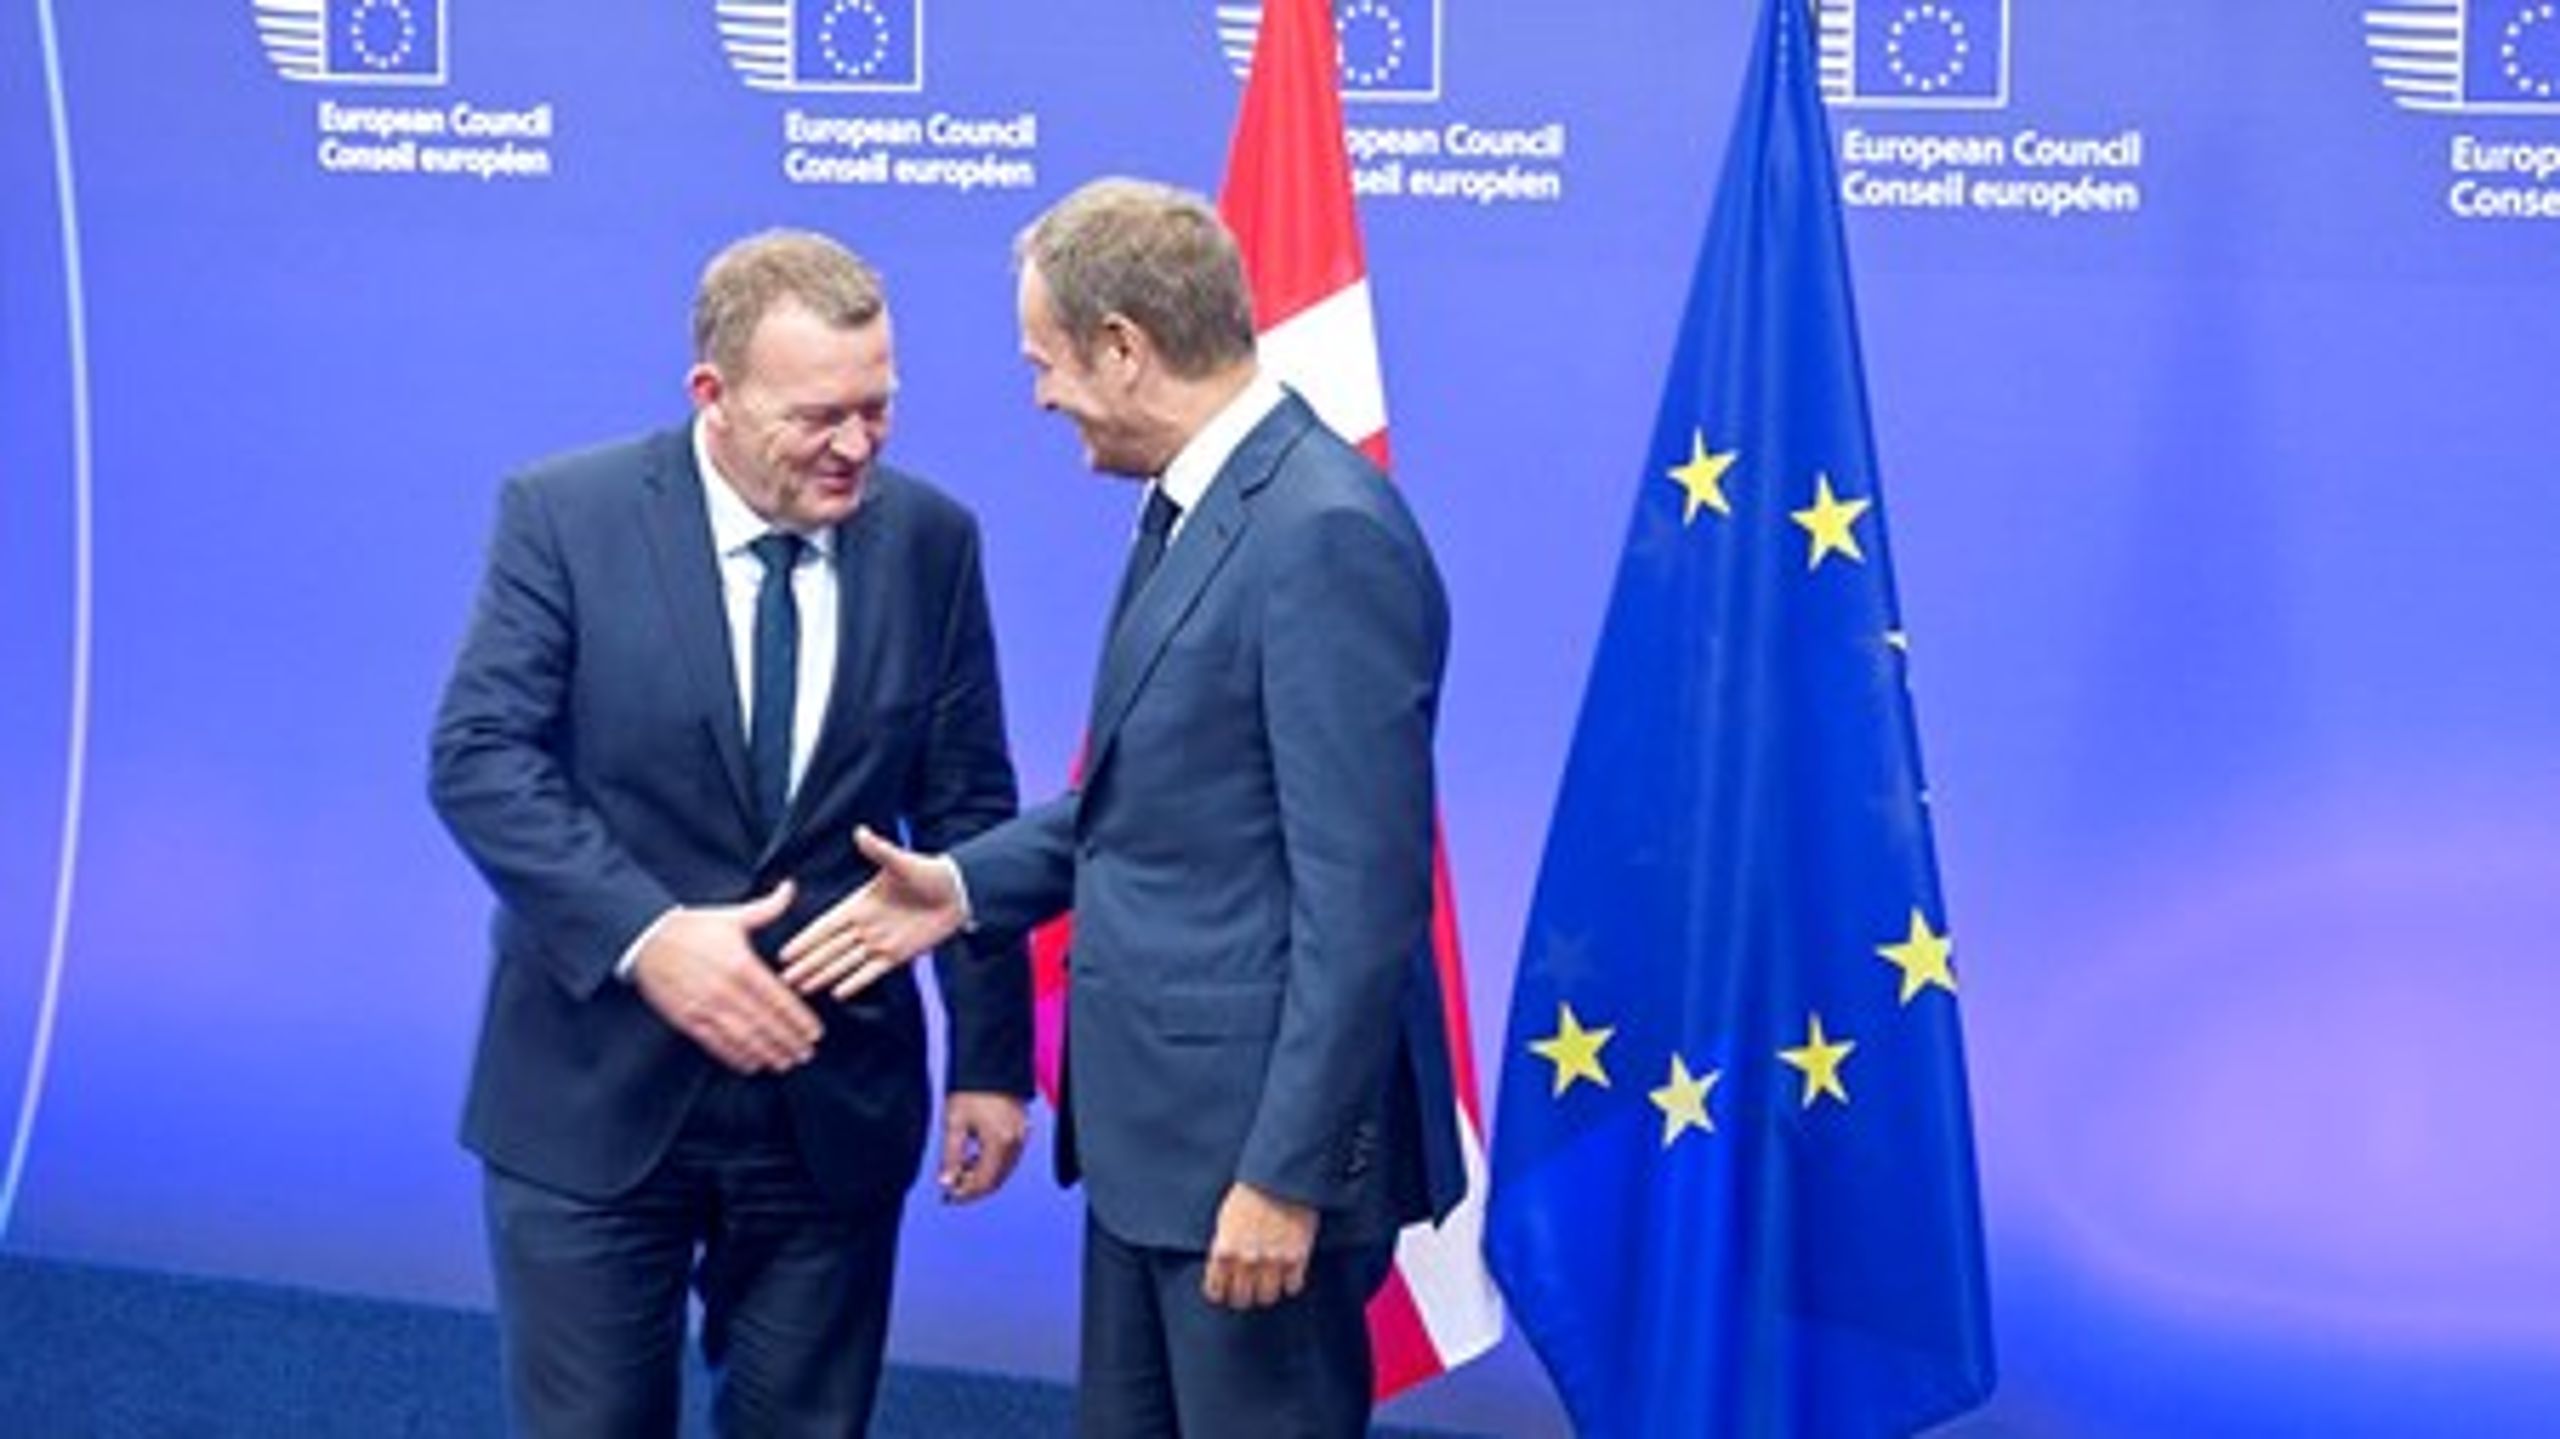 Lars Løkke Rasmussen er torsdag i Bruxelles for at mødes med flere EU-toppolitikere. Her giver han hånd til formanden for Det Europæiske Råd, Donald Tusk.